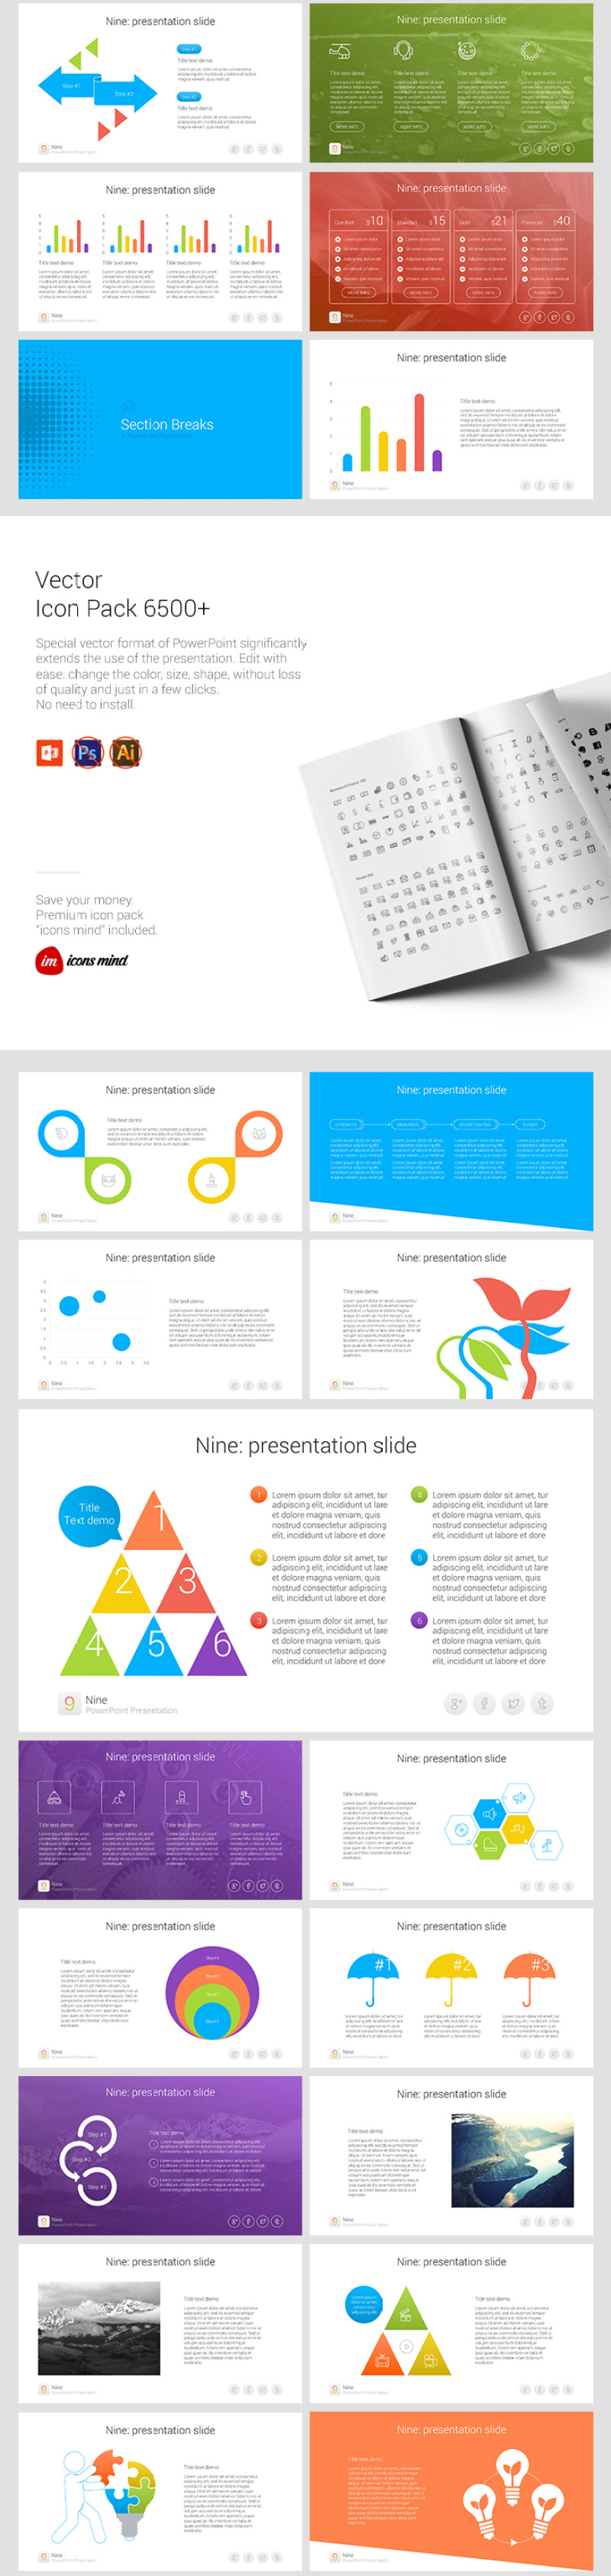 9个多用途PPT信息图表模板nine multipurpose powerpoint template